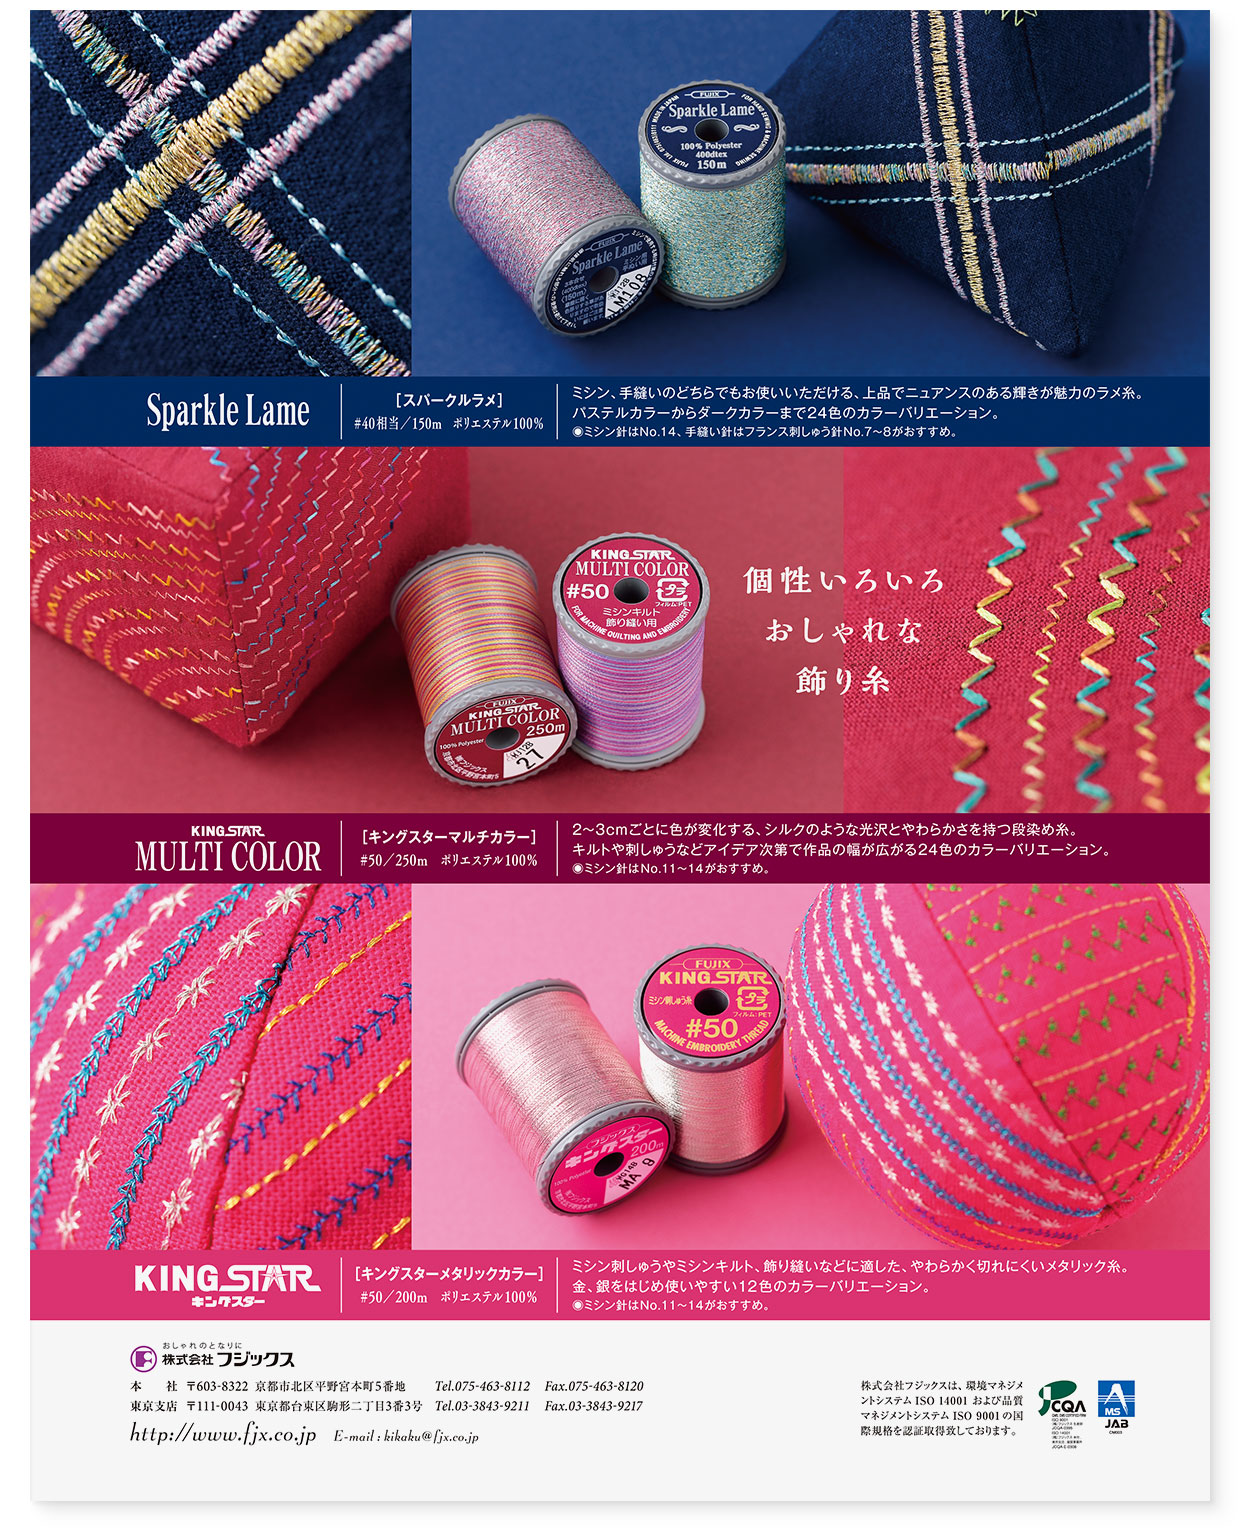 ADVERTISING | 雑誌広告『個性いろいろおしゃれな飾り糸』FUJIX | GEN 